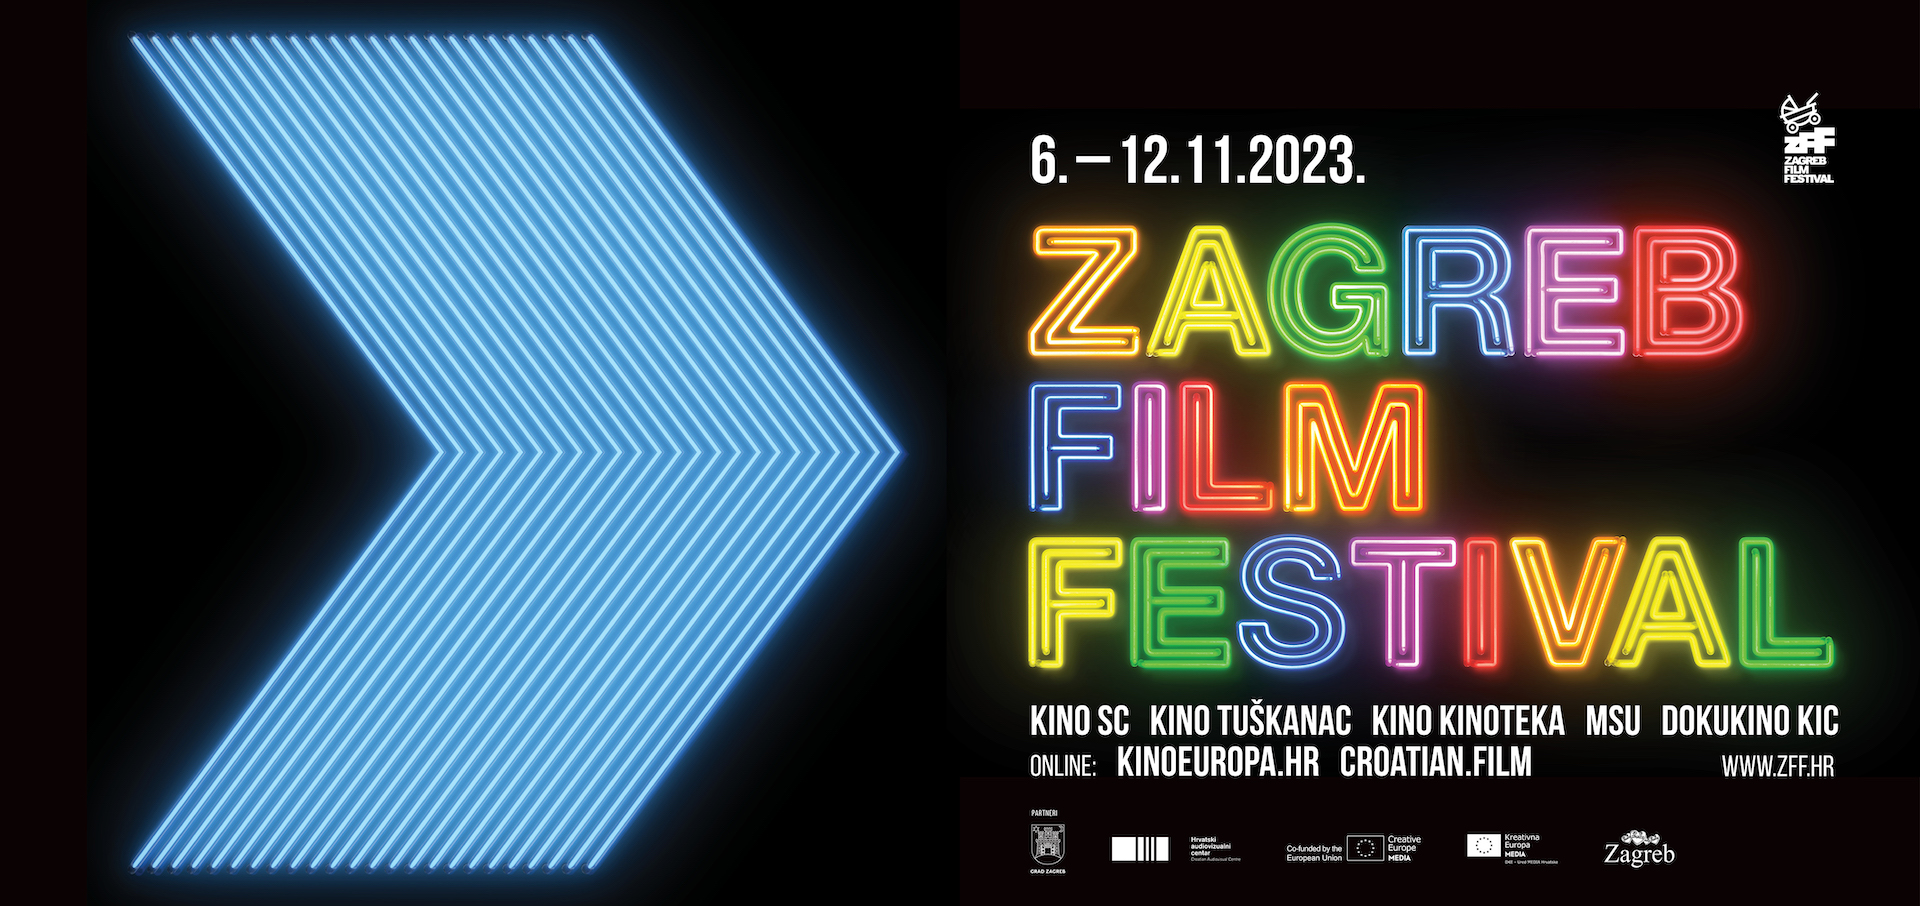 Bliži se 21. Zagreb Film Festival / The 21st Zagreb Film Festival Approaches